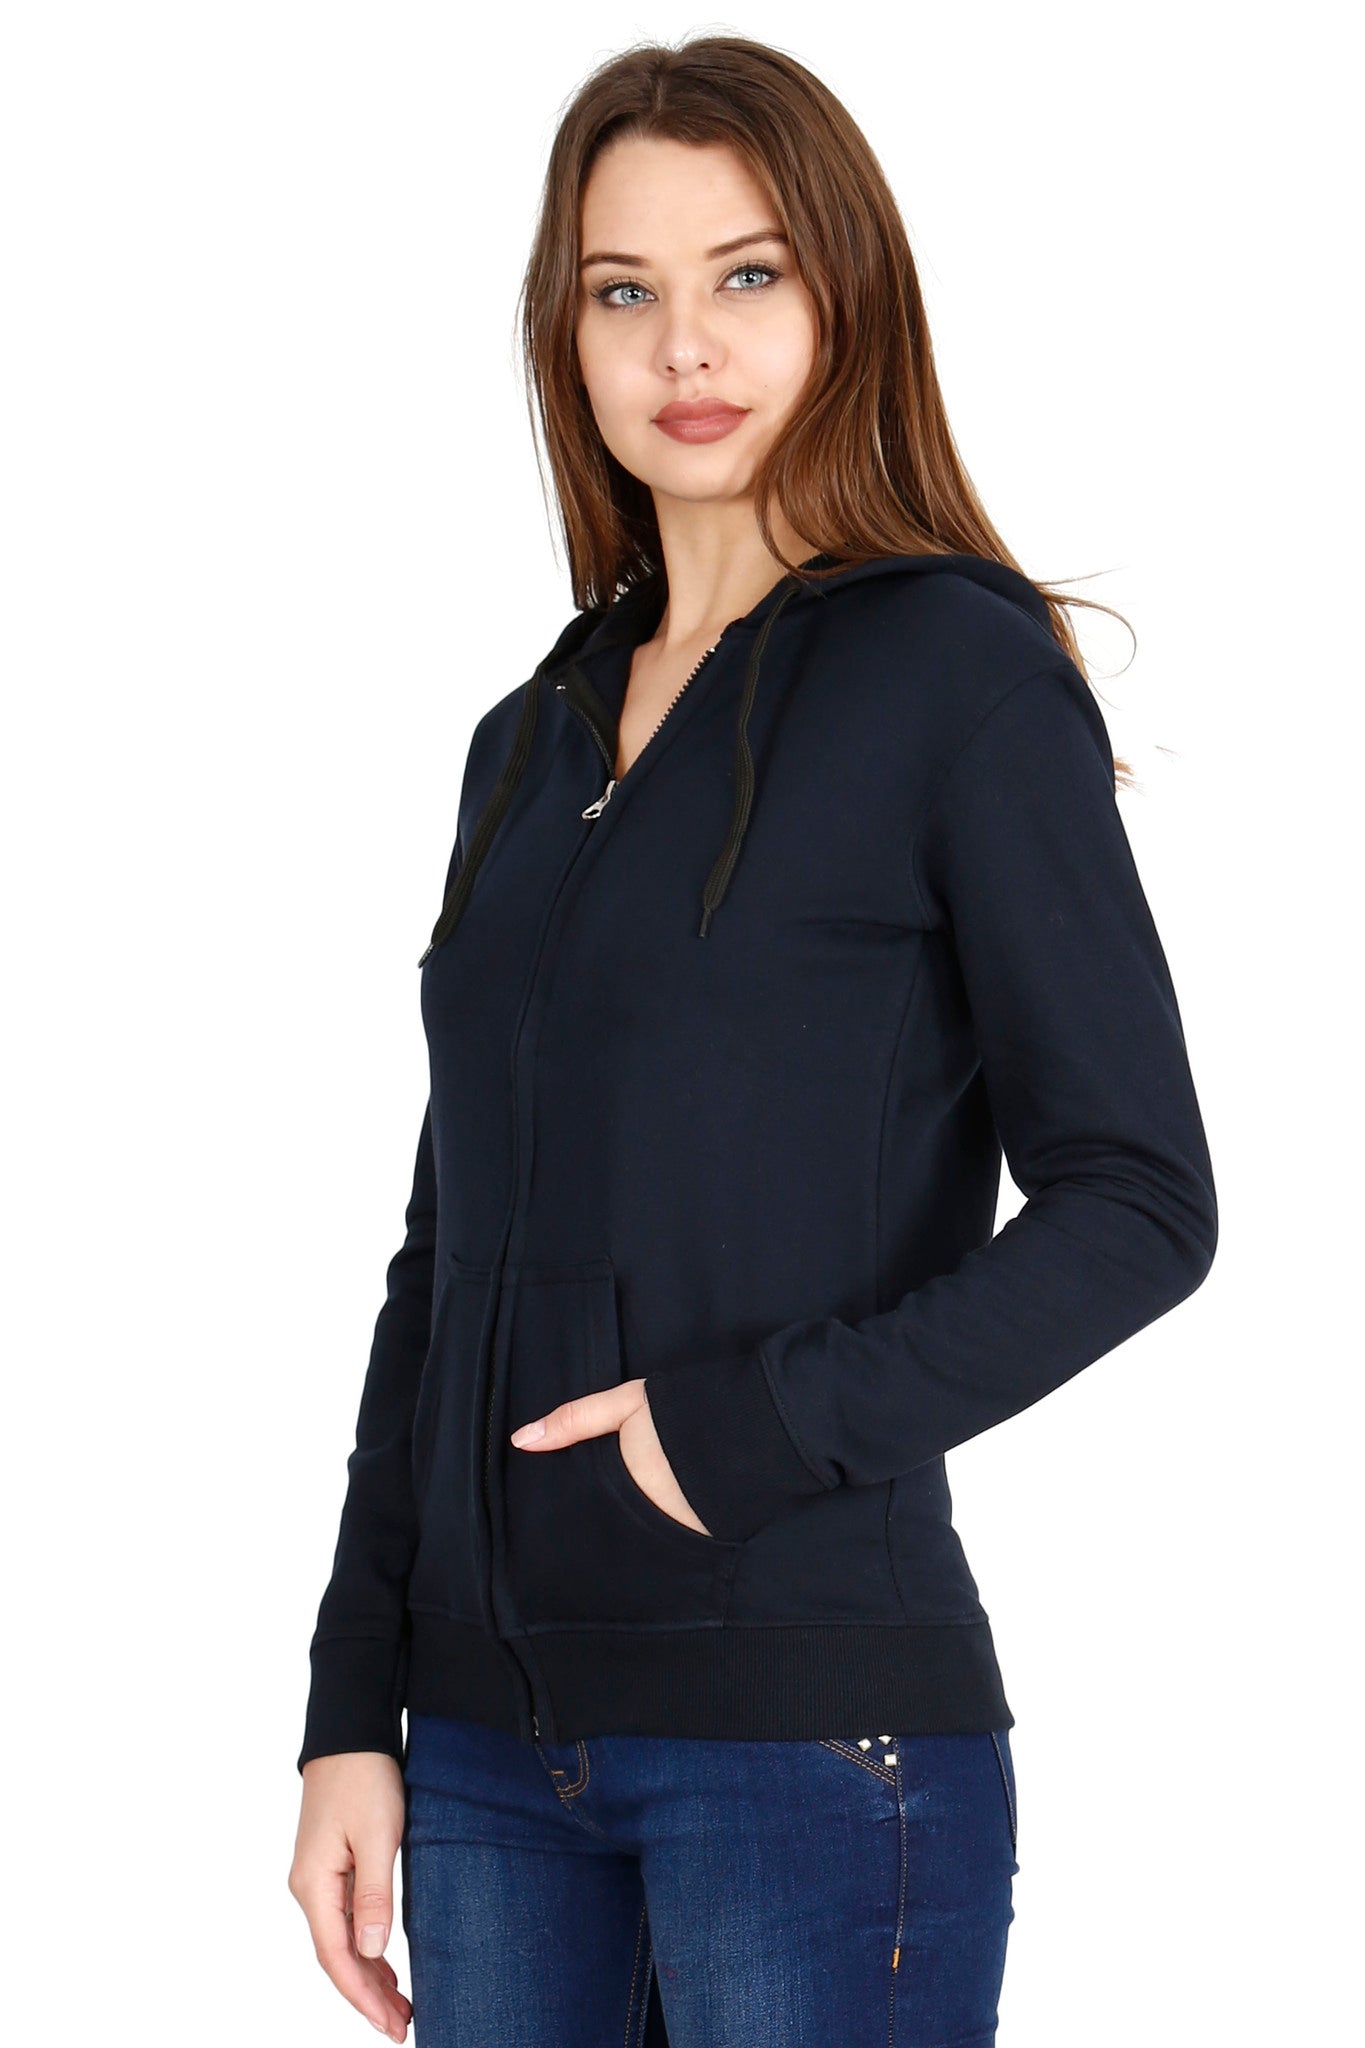 Women's Cotton Plain Full Sleeve Navy Blue Color Hoodies/Sweatshirt